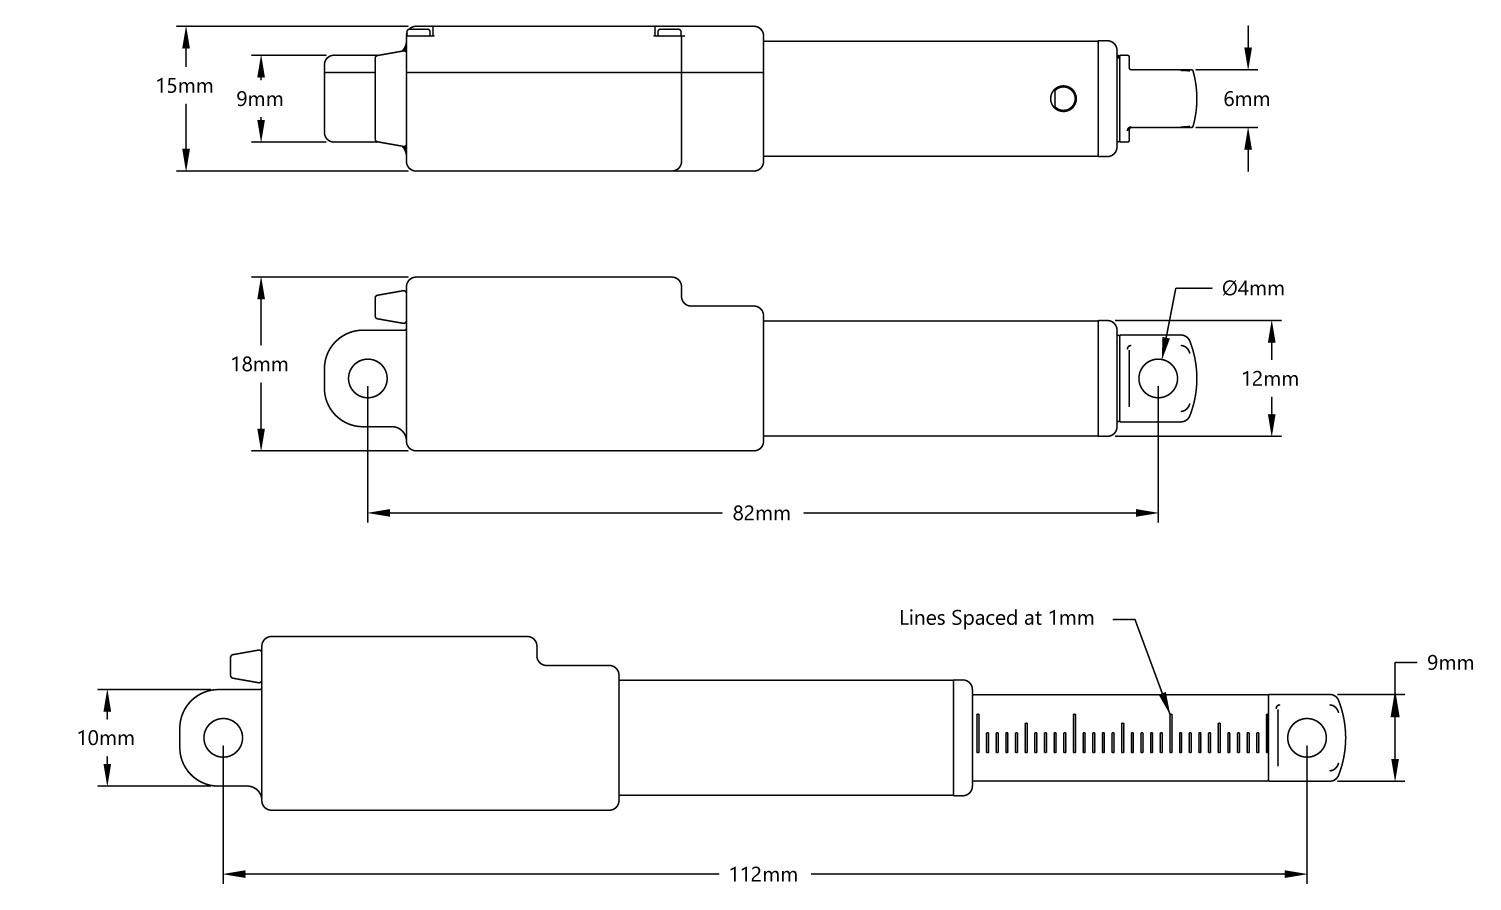  Hitec HLS12 Series 6V Linear Actuator 30mm 50:1 - Click to Enlarge